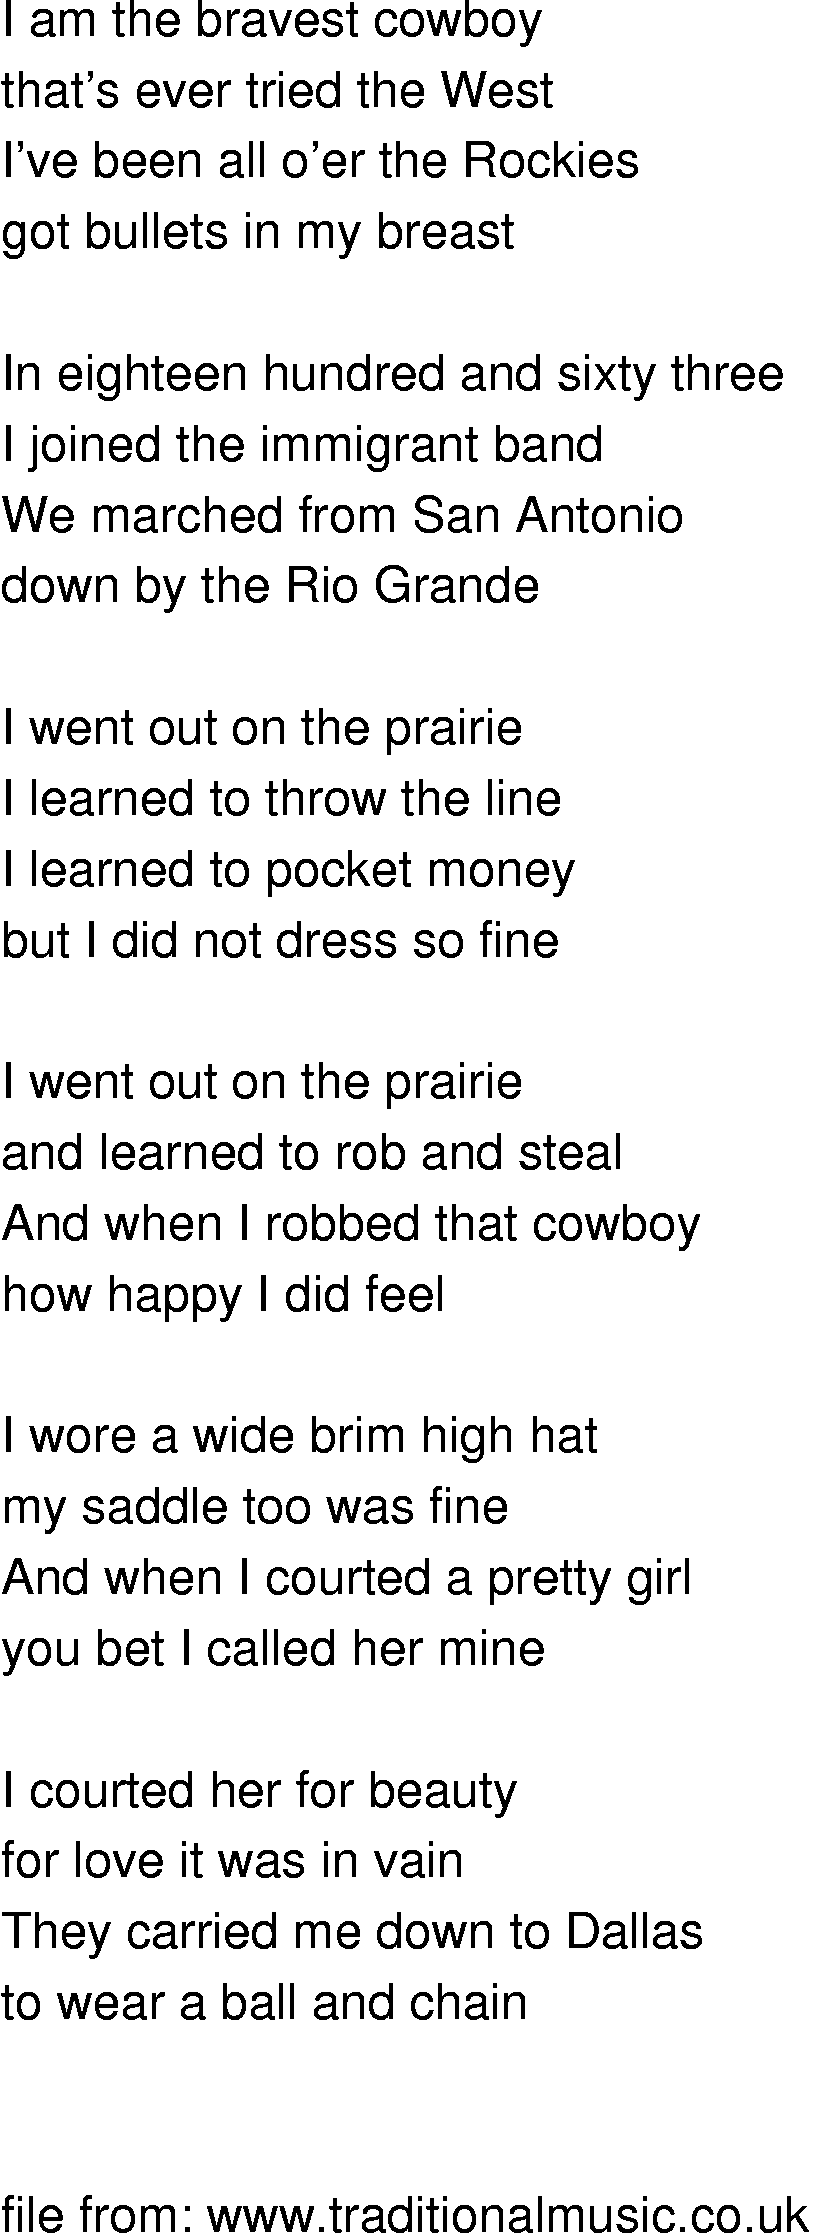 Old-Time (oldtimey) Song Lyrics - bravest cowboy